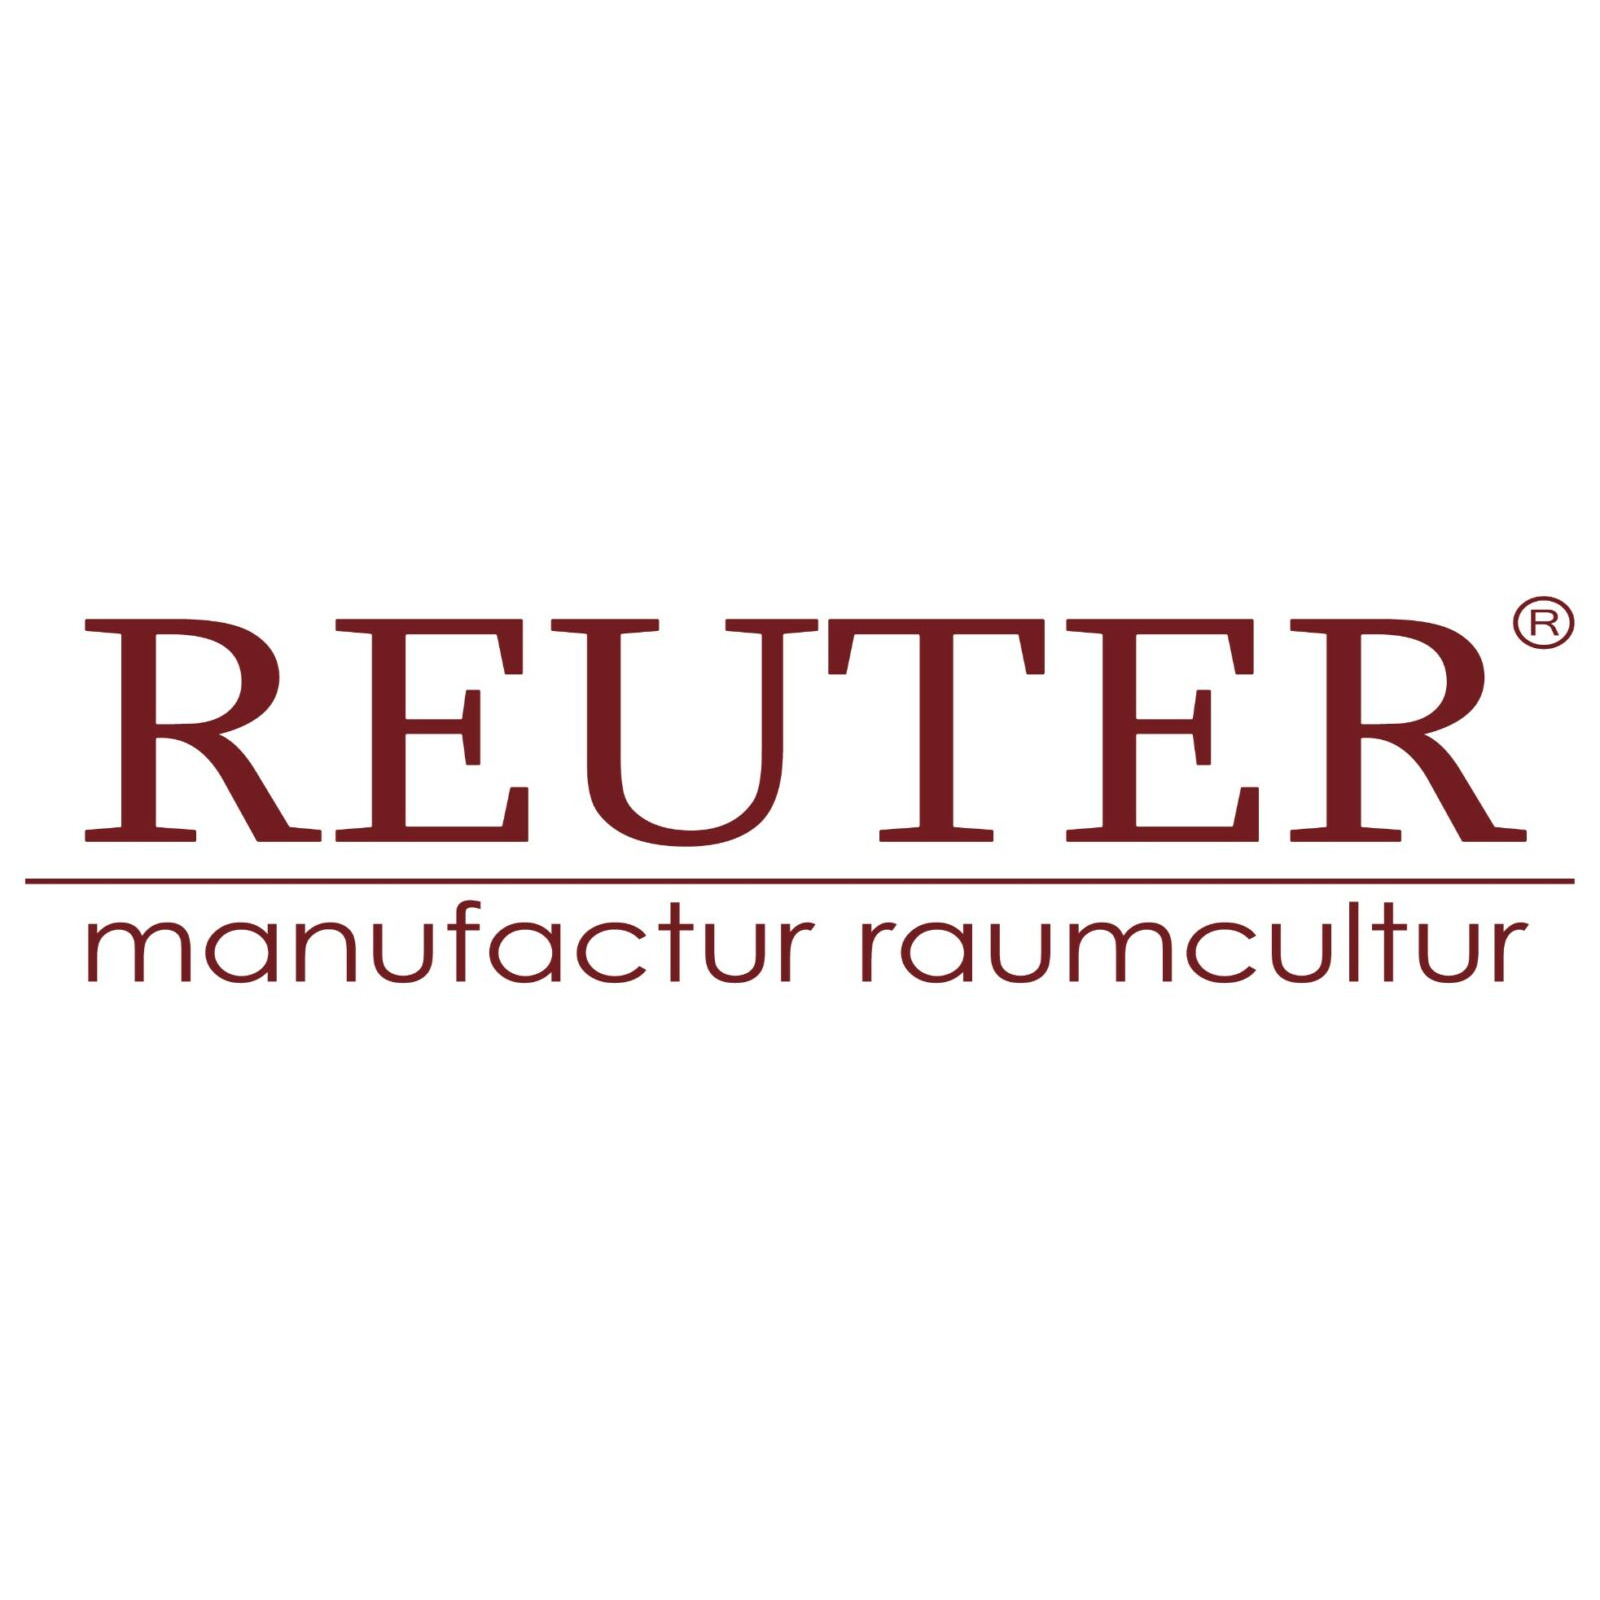 Logo REUTER manufactur raumcultur